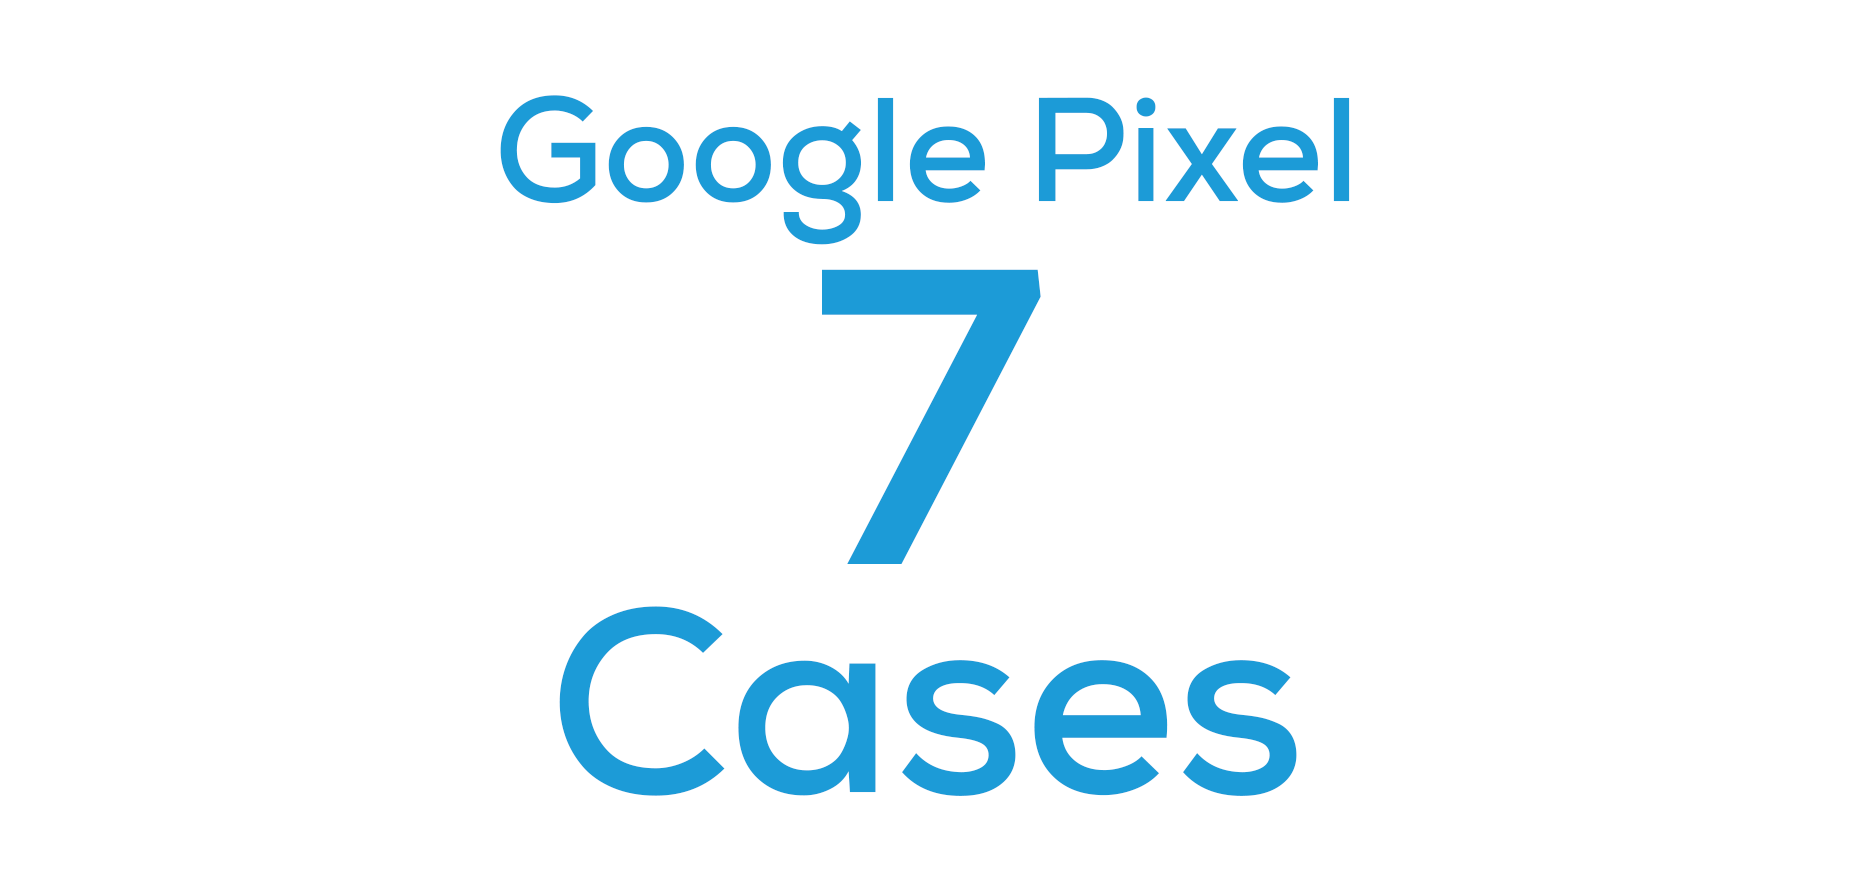 Google Pixel 7 Cases